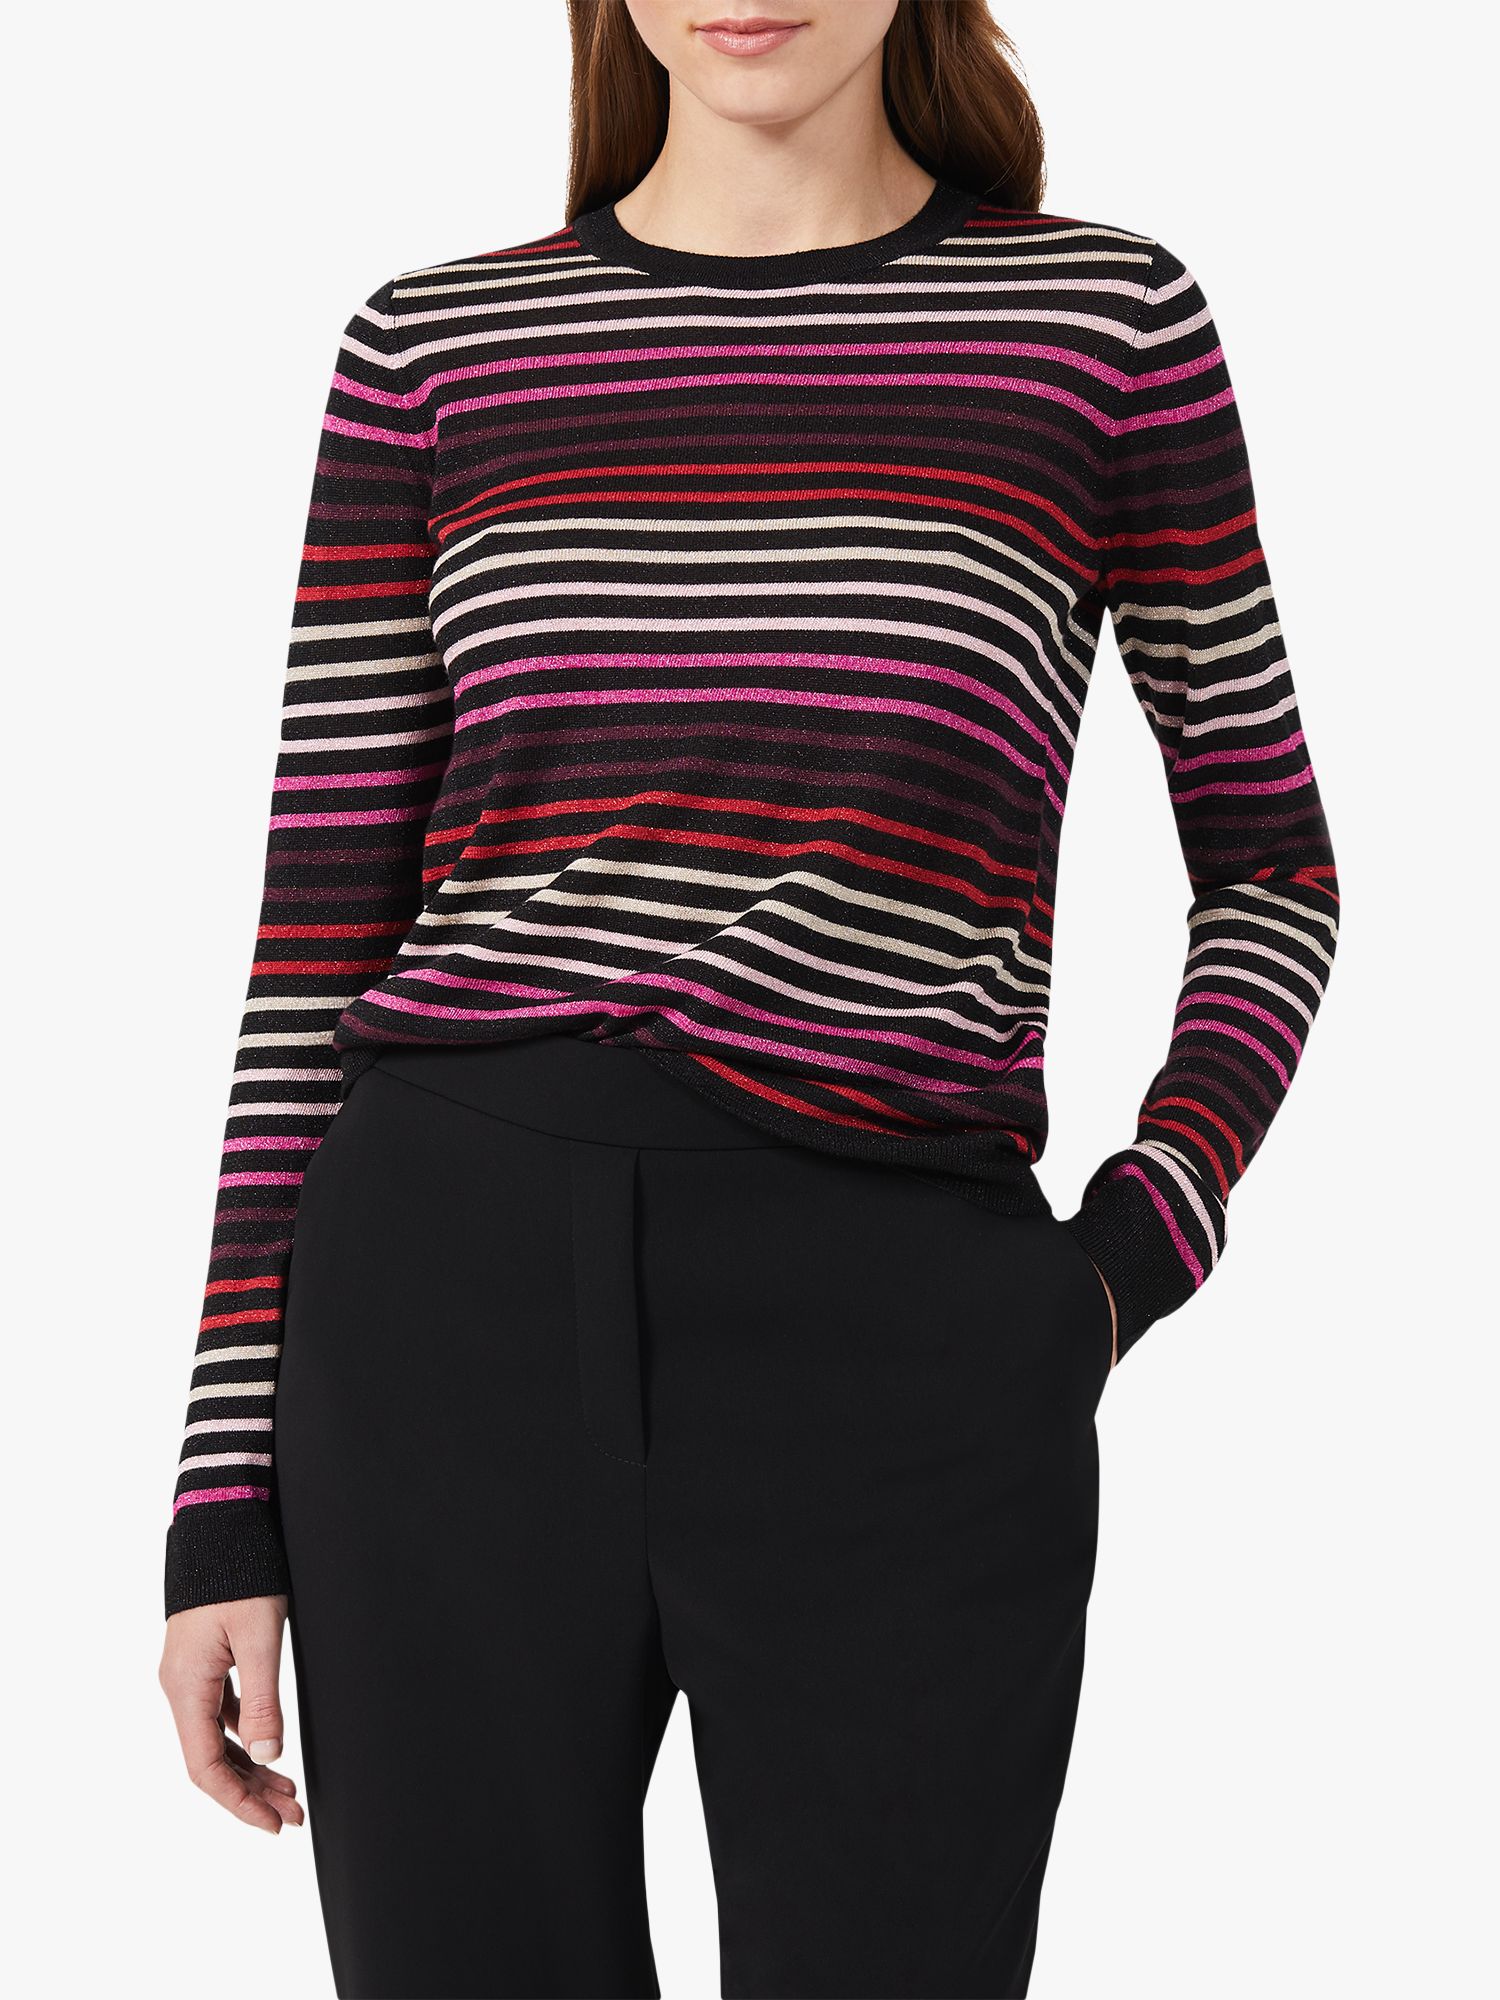 Hobbs Gigi Stripe Sweater, Black/Multi at John Lewis & Partners